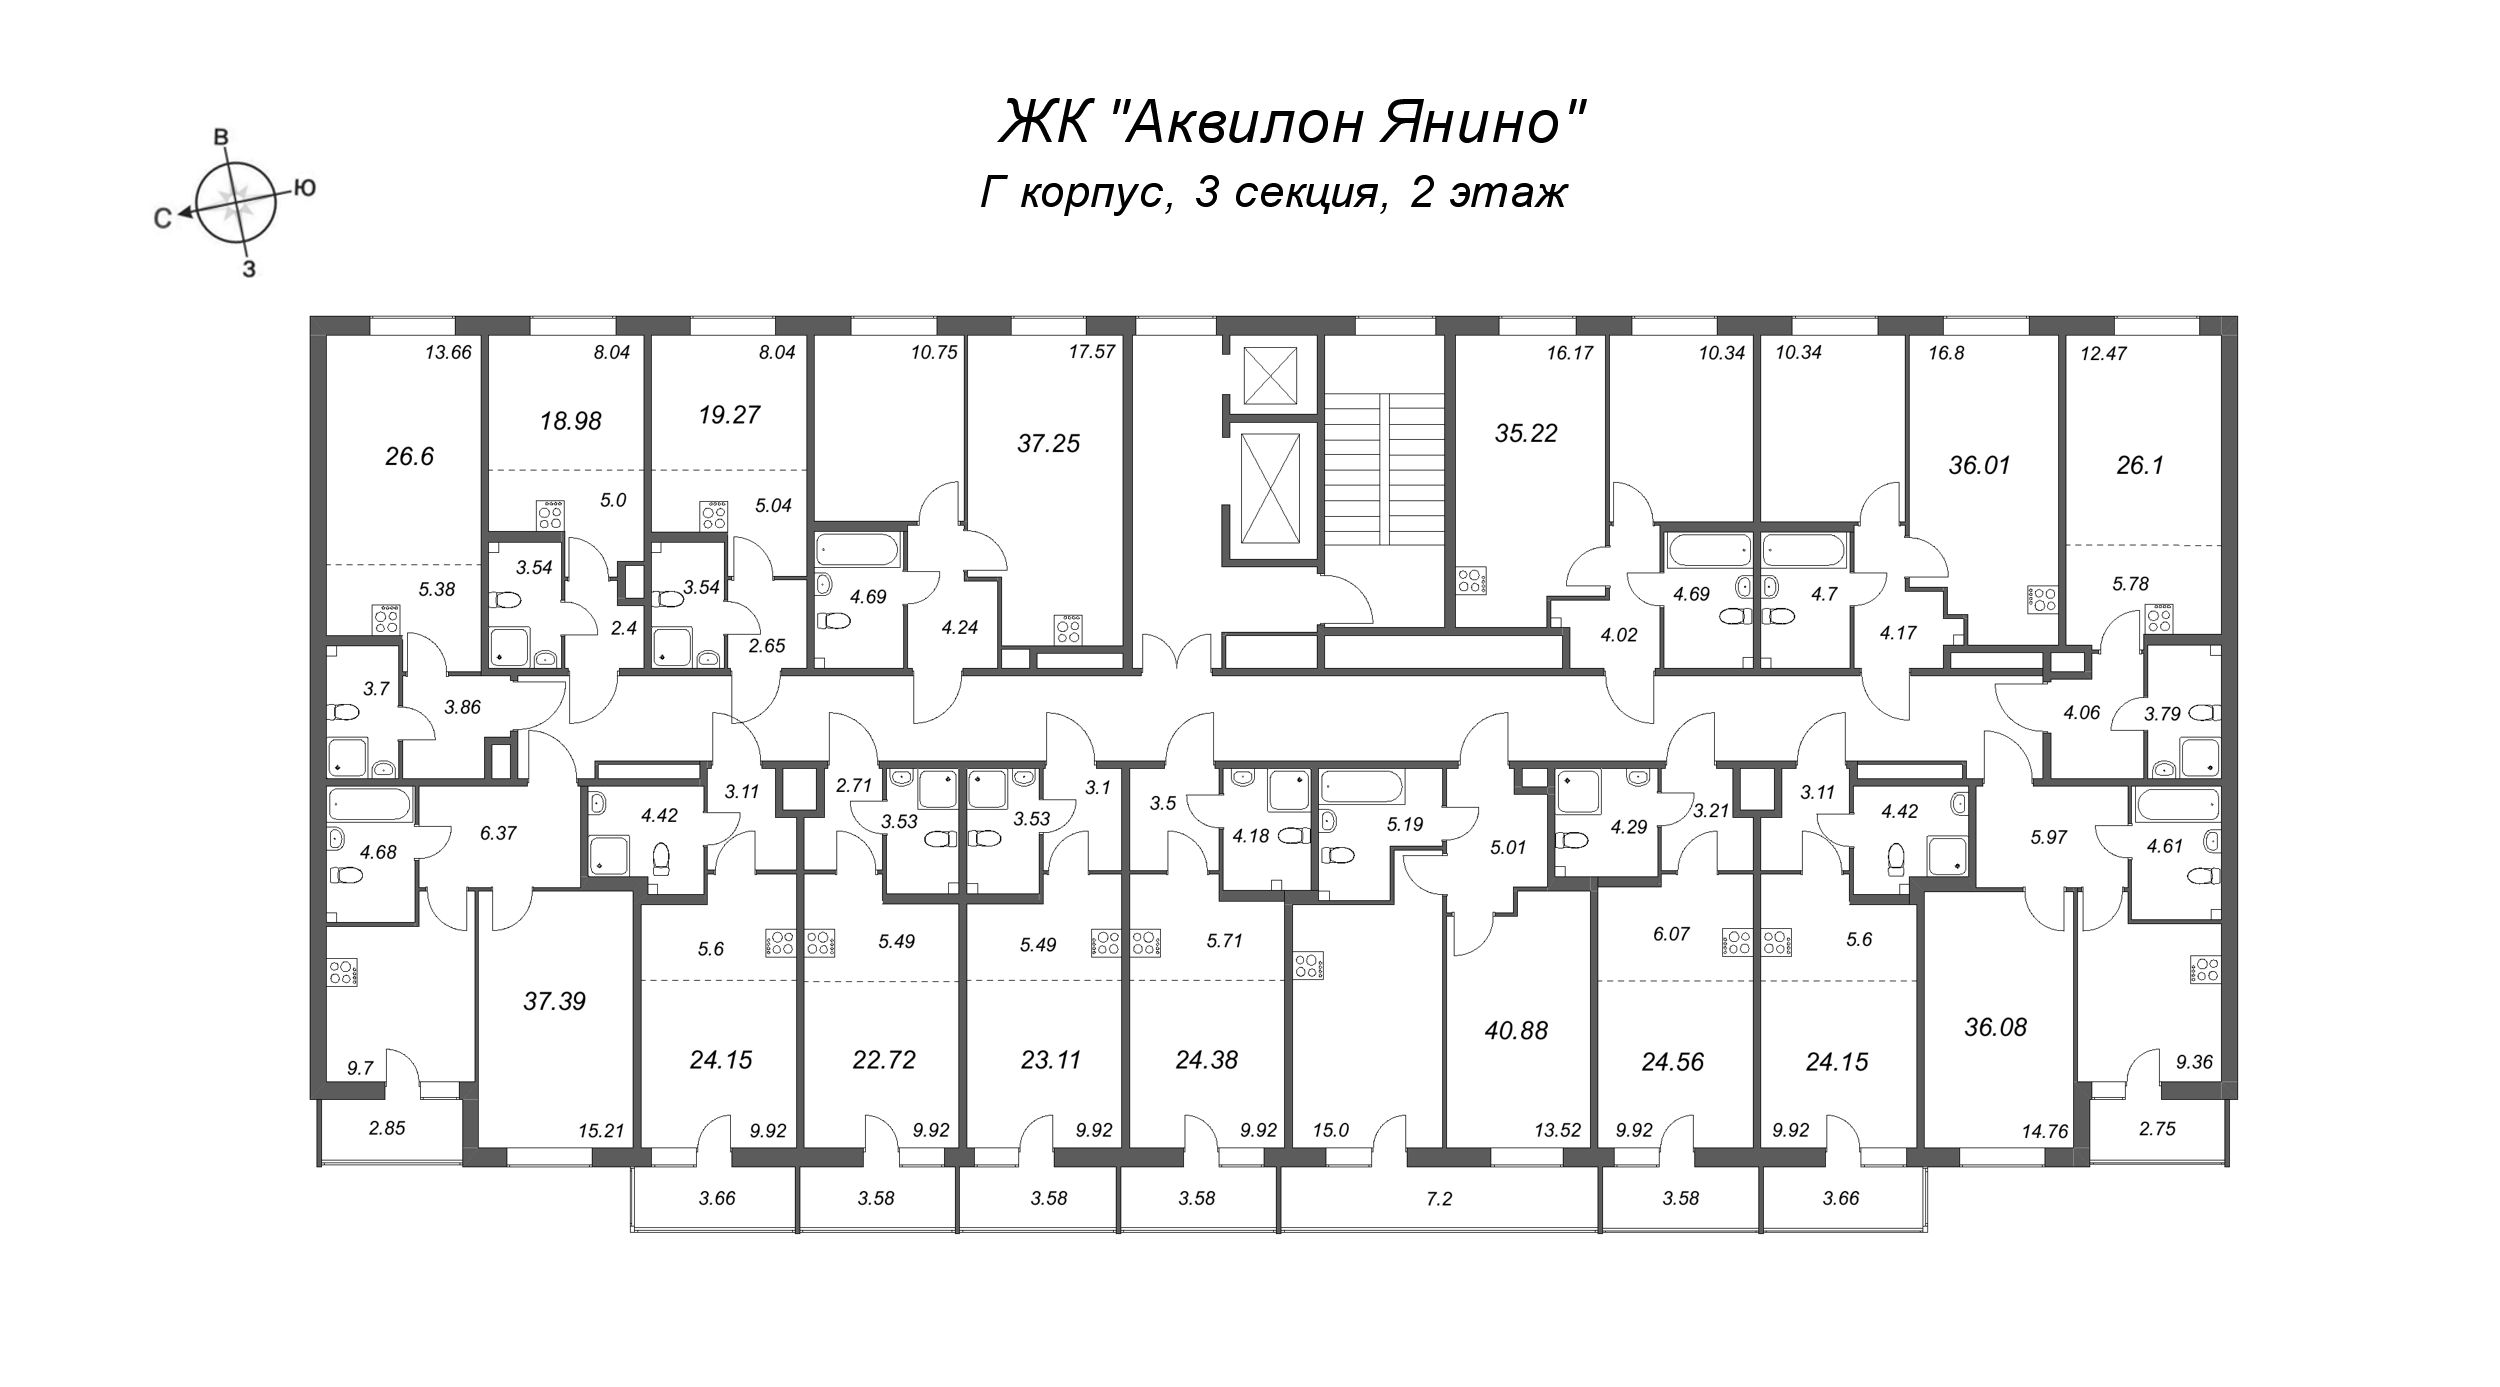 2-комнатная (Евро) квартира, 37.25 м² - планировка этажа